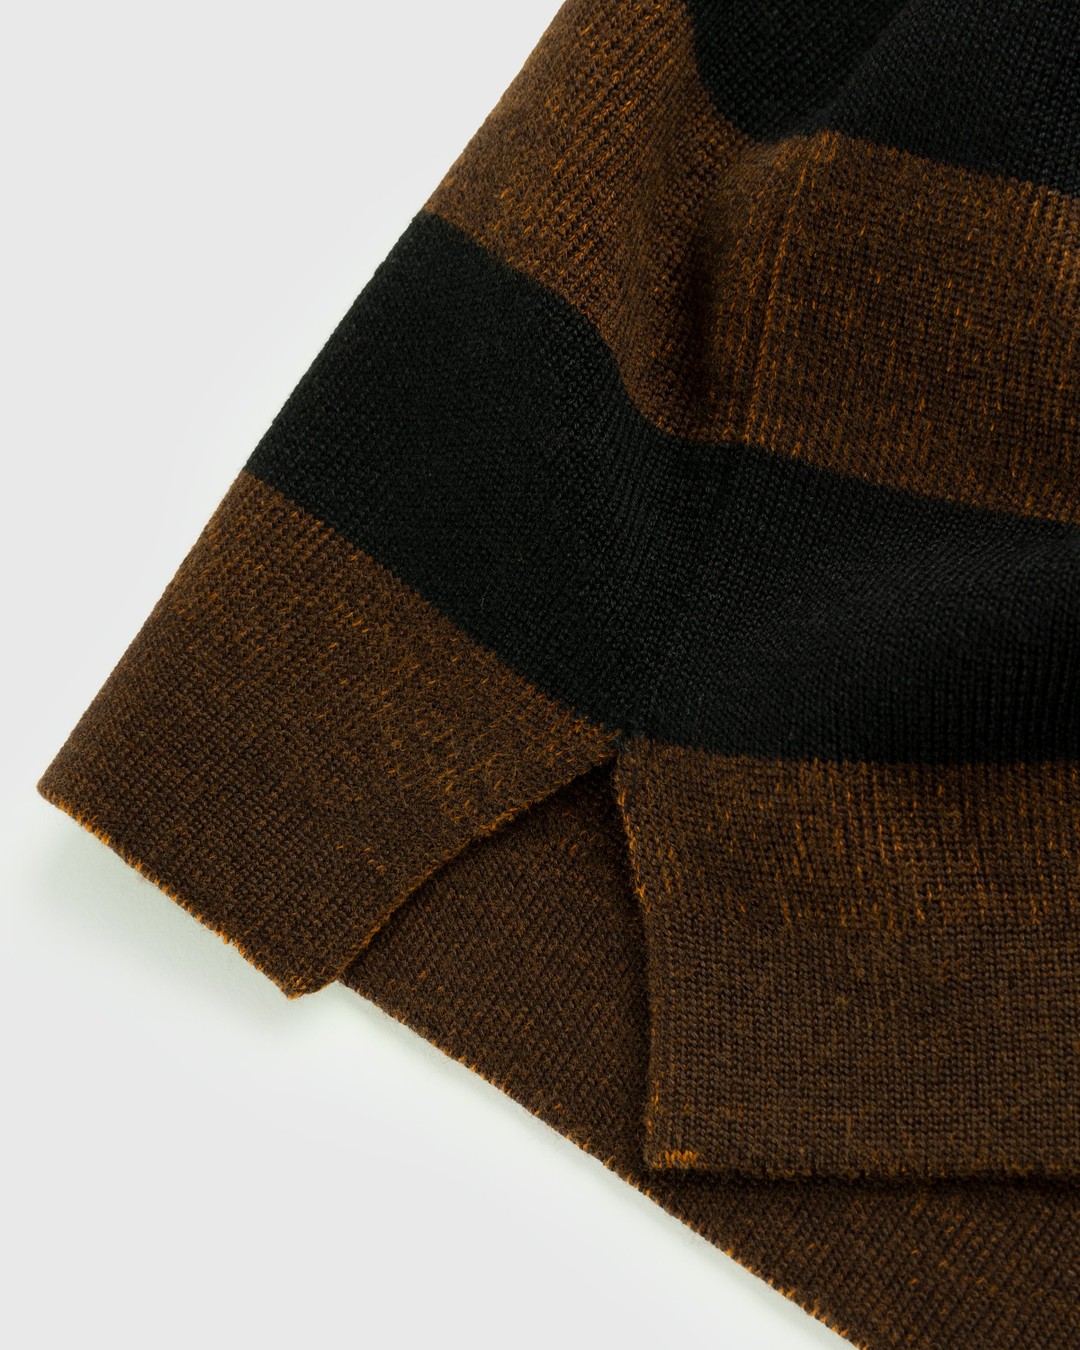 Kenzo – Striped Merino Wool Polo Dark Camel - Polos - Brown - Image 3